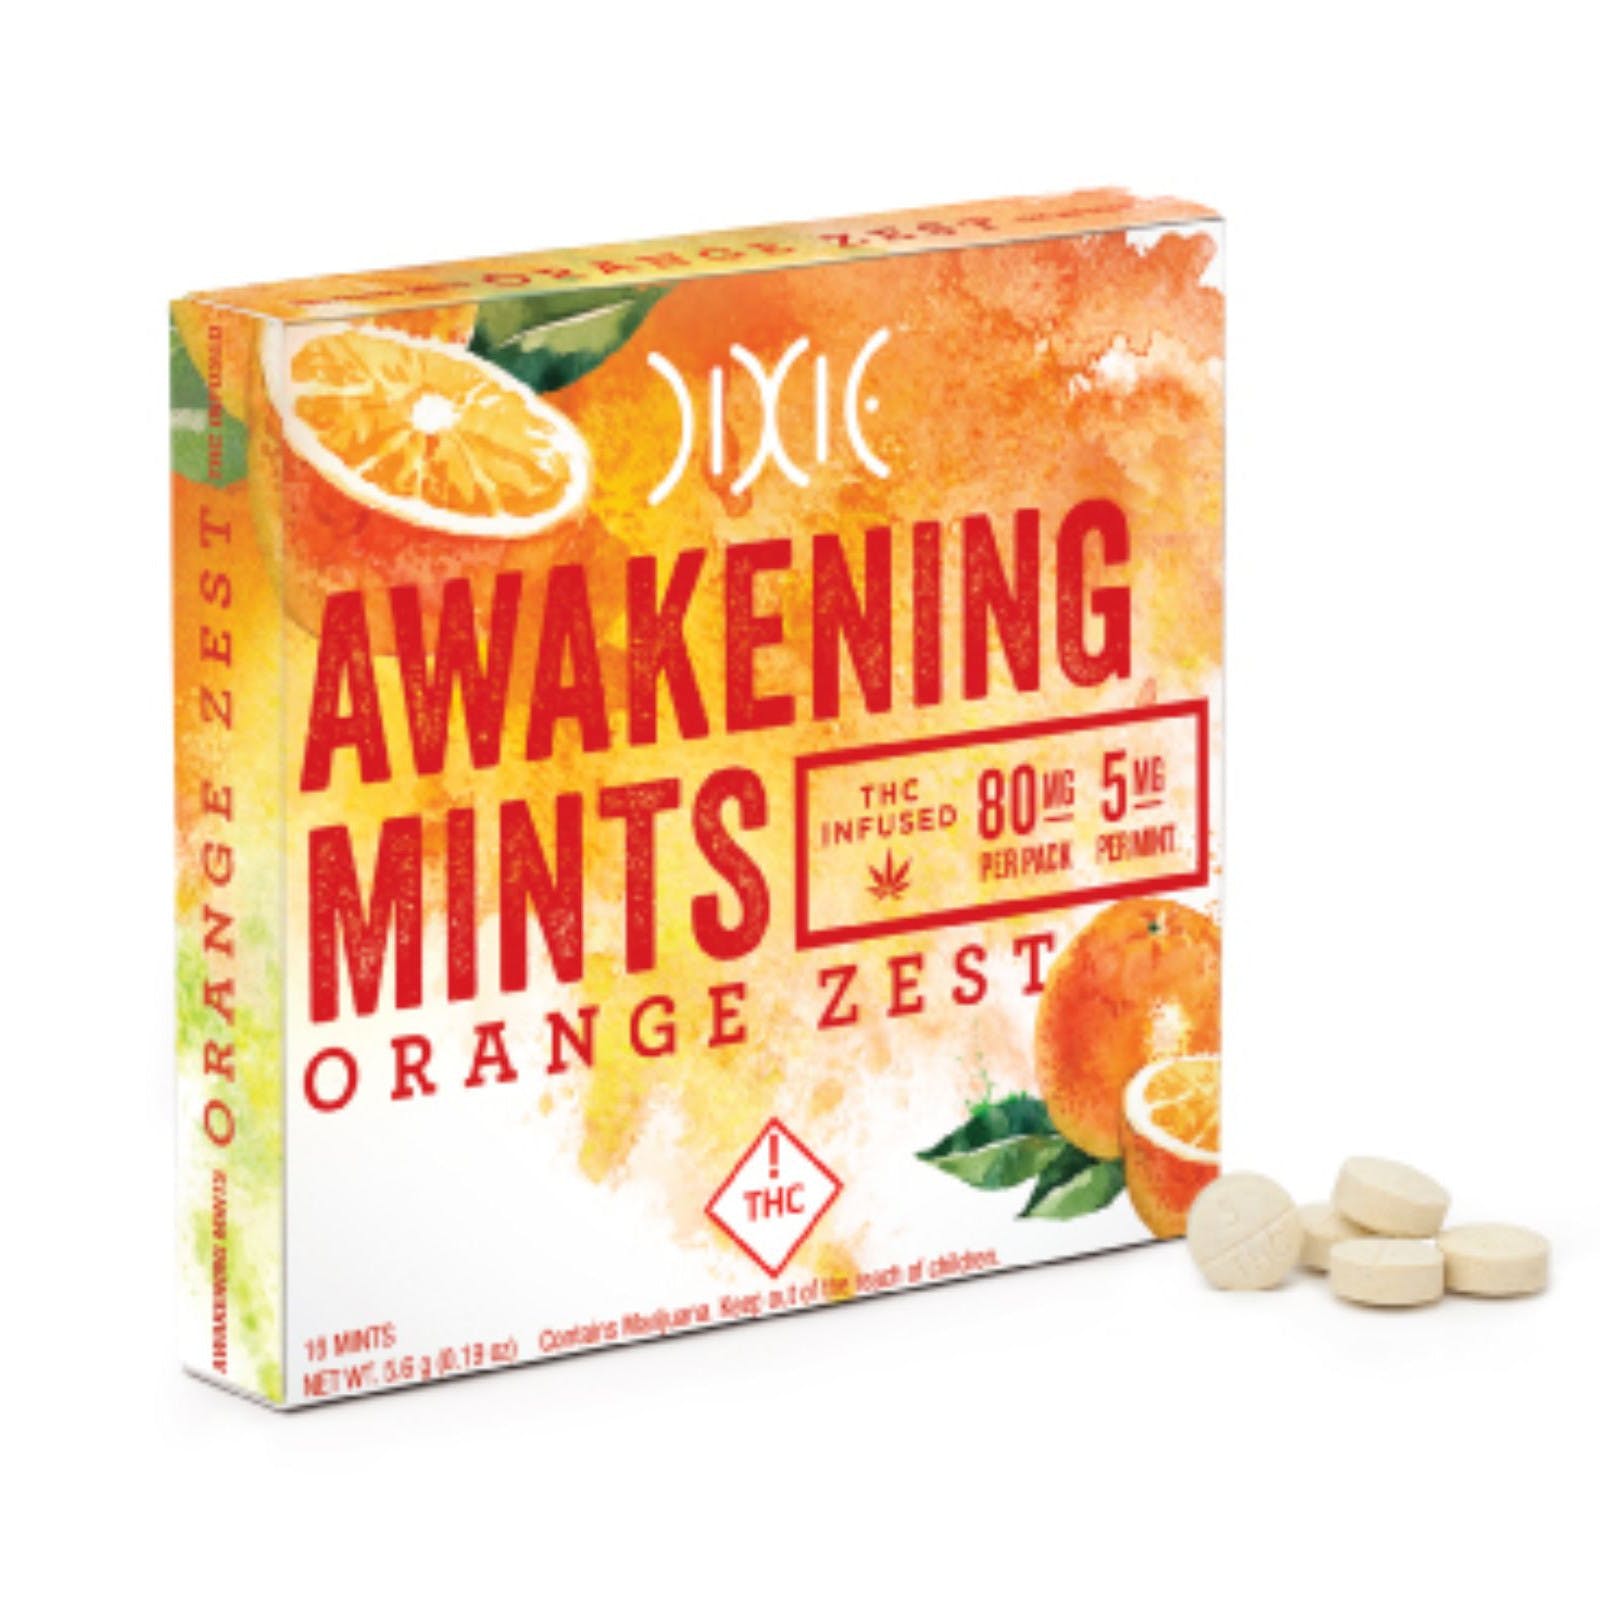 edible-dixie-awakening-mints-orange-zest-80mg-thc